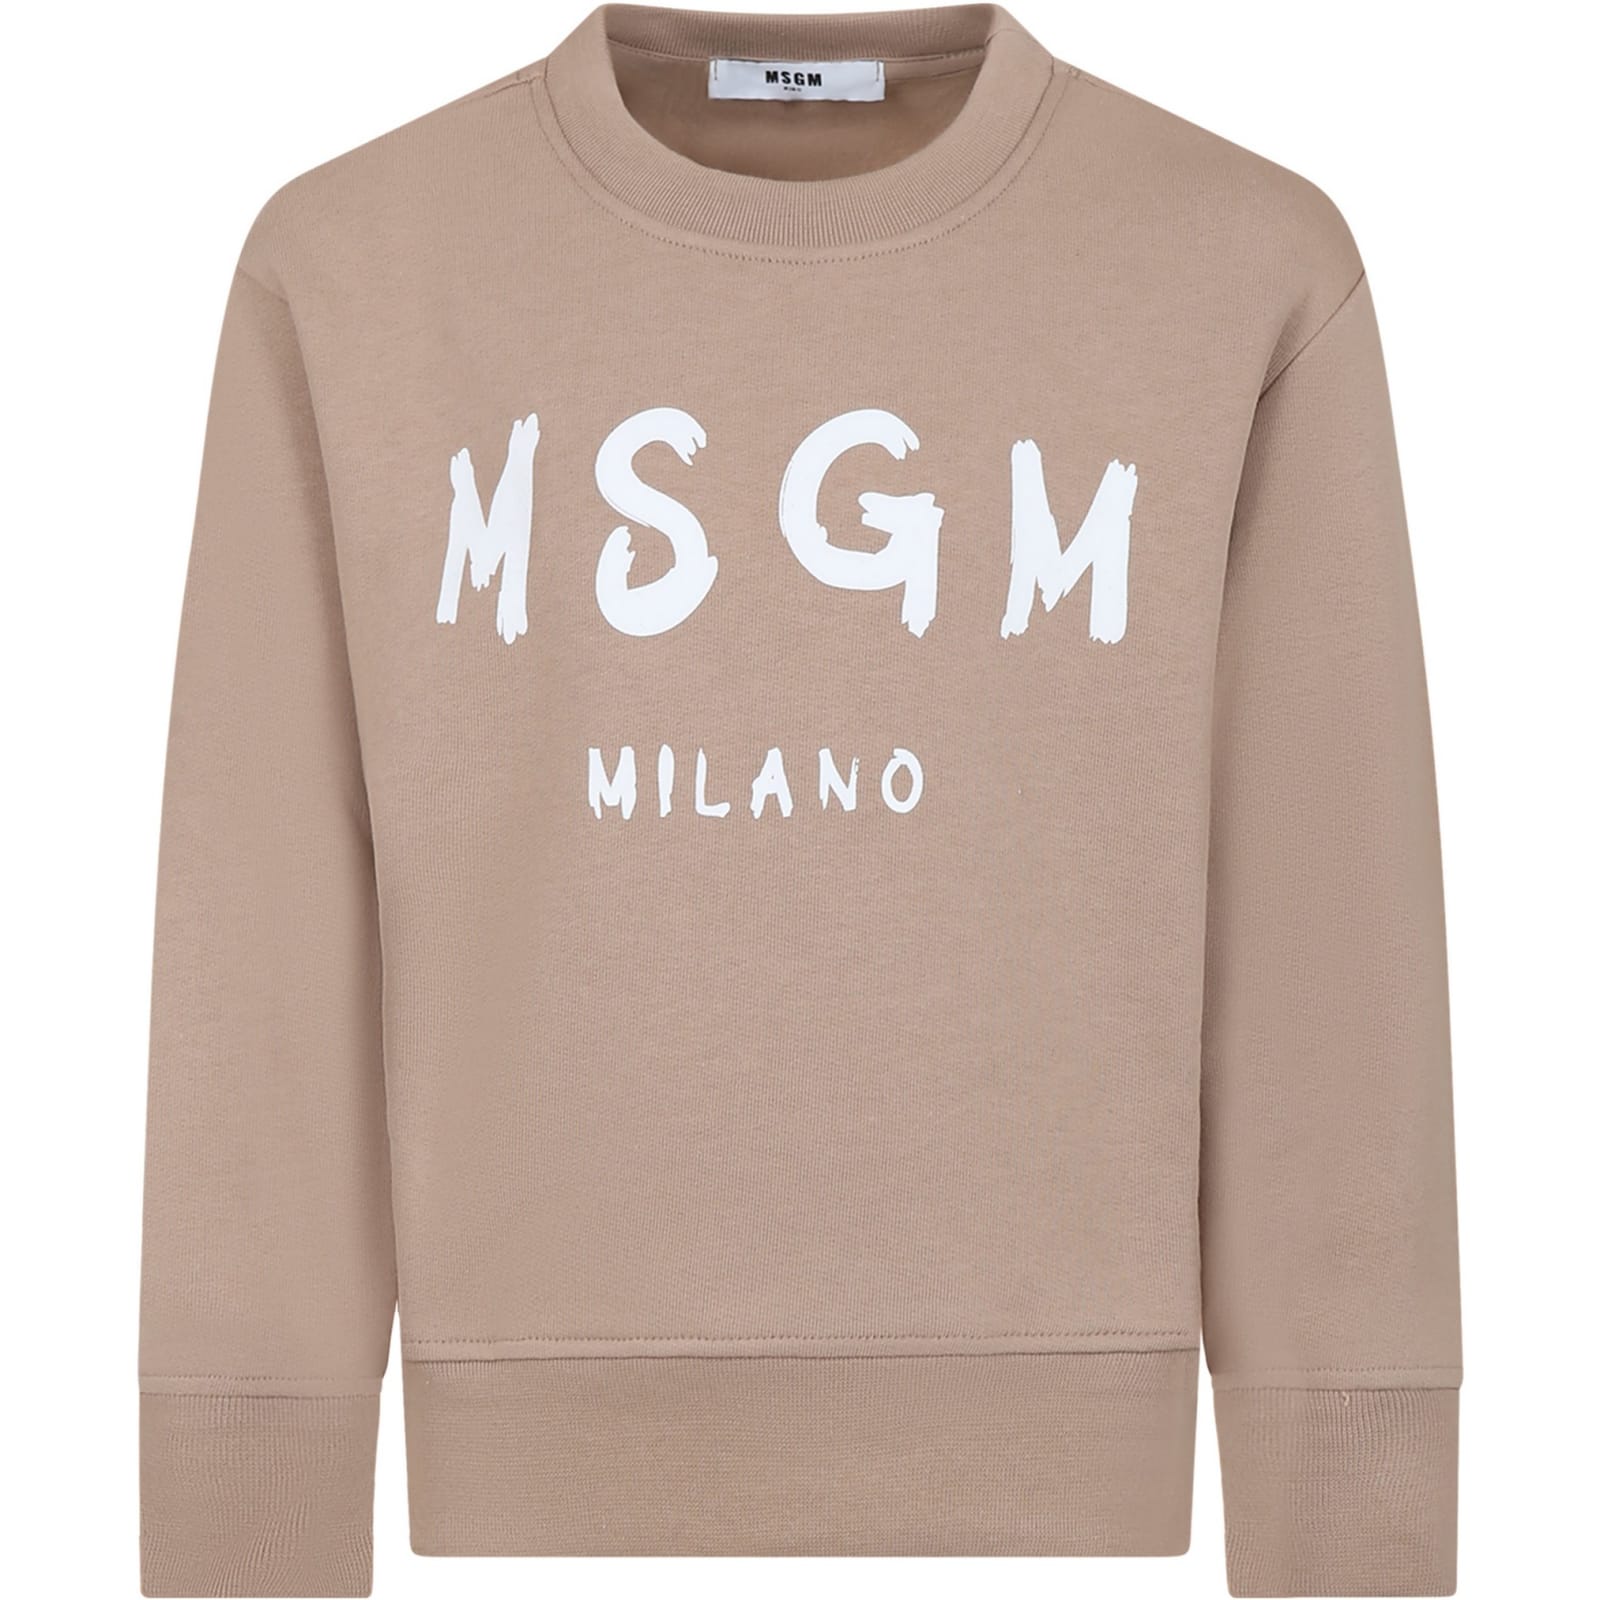 Msgm Beige Sweatshirt For Kids With Logo